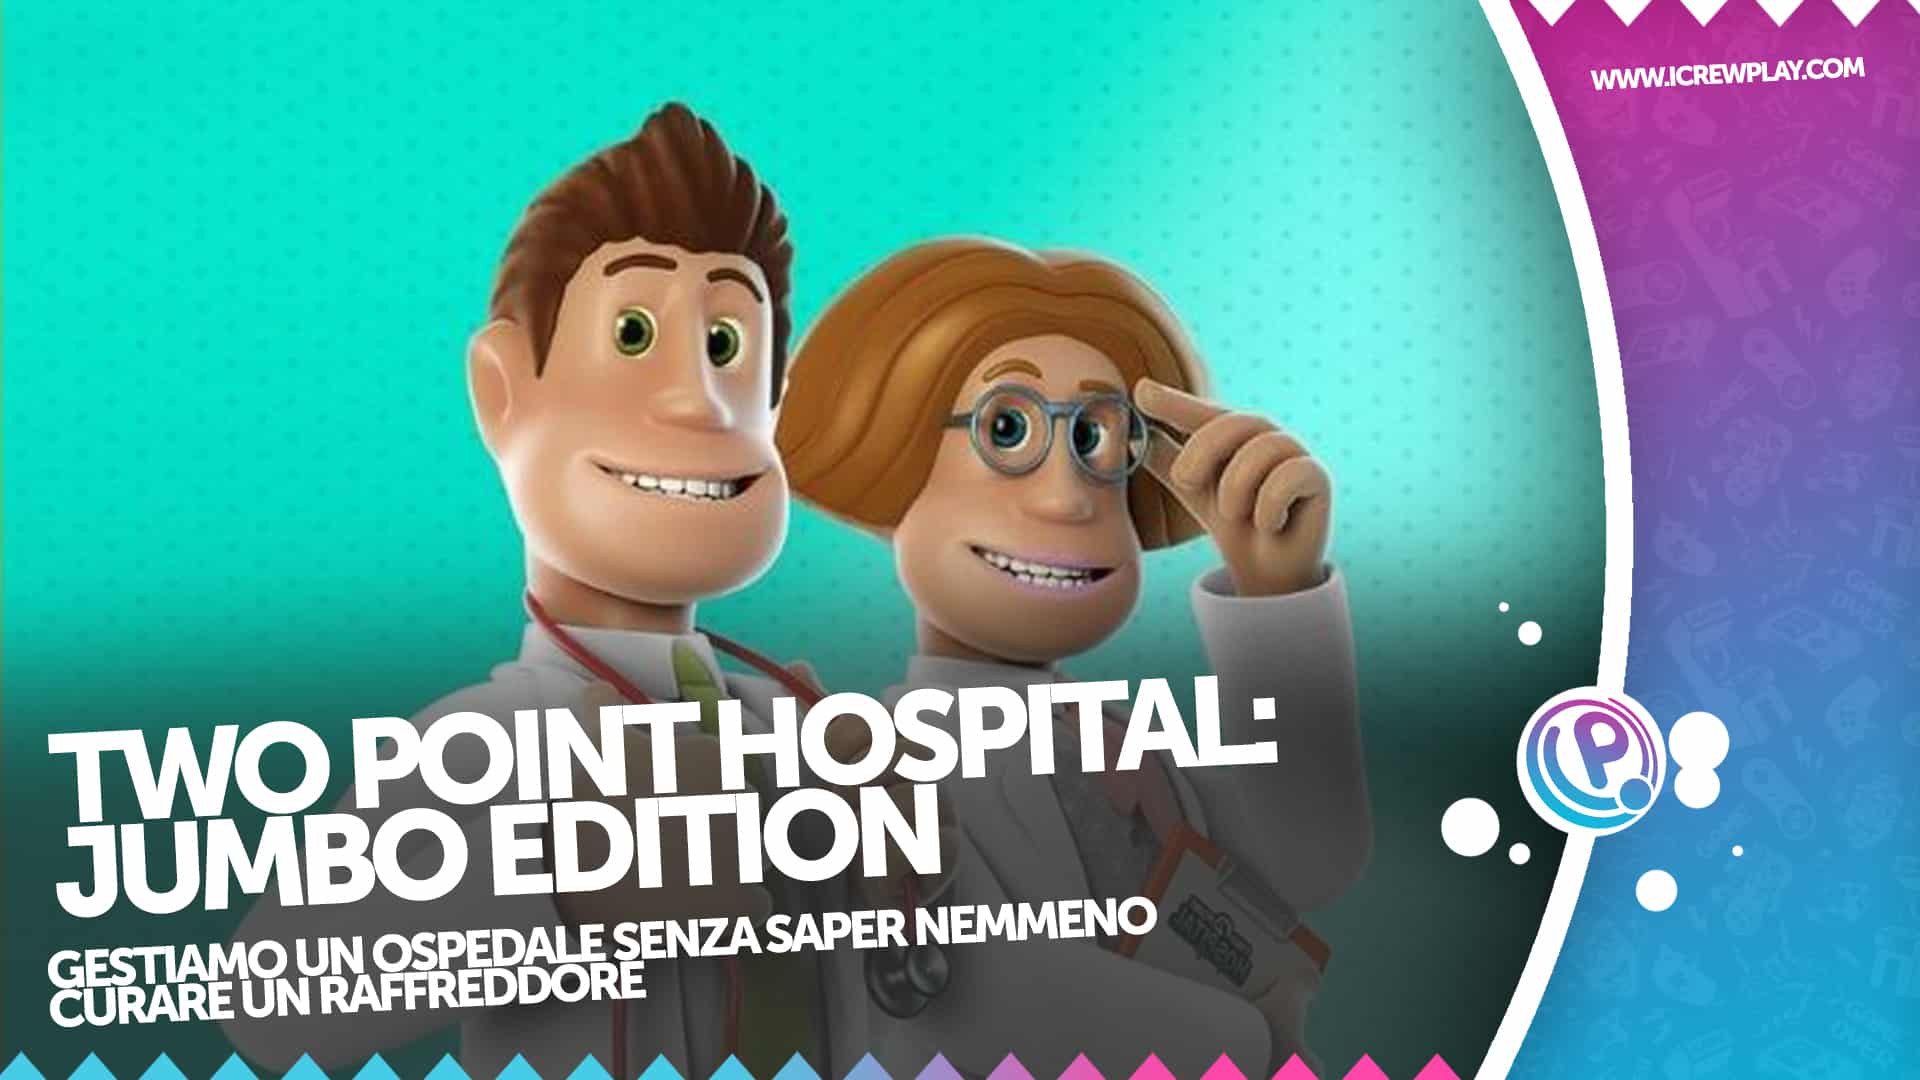 Two Point Hospital: Jumbo Edition la recensione 2